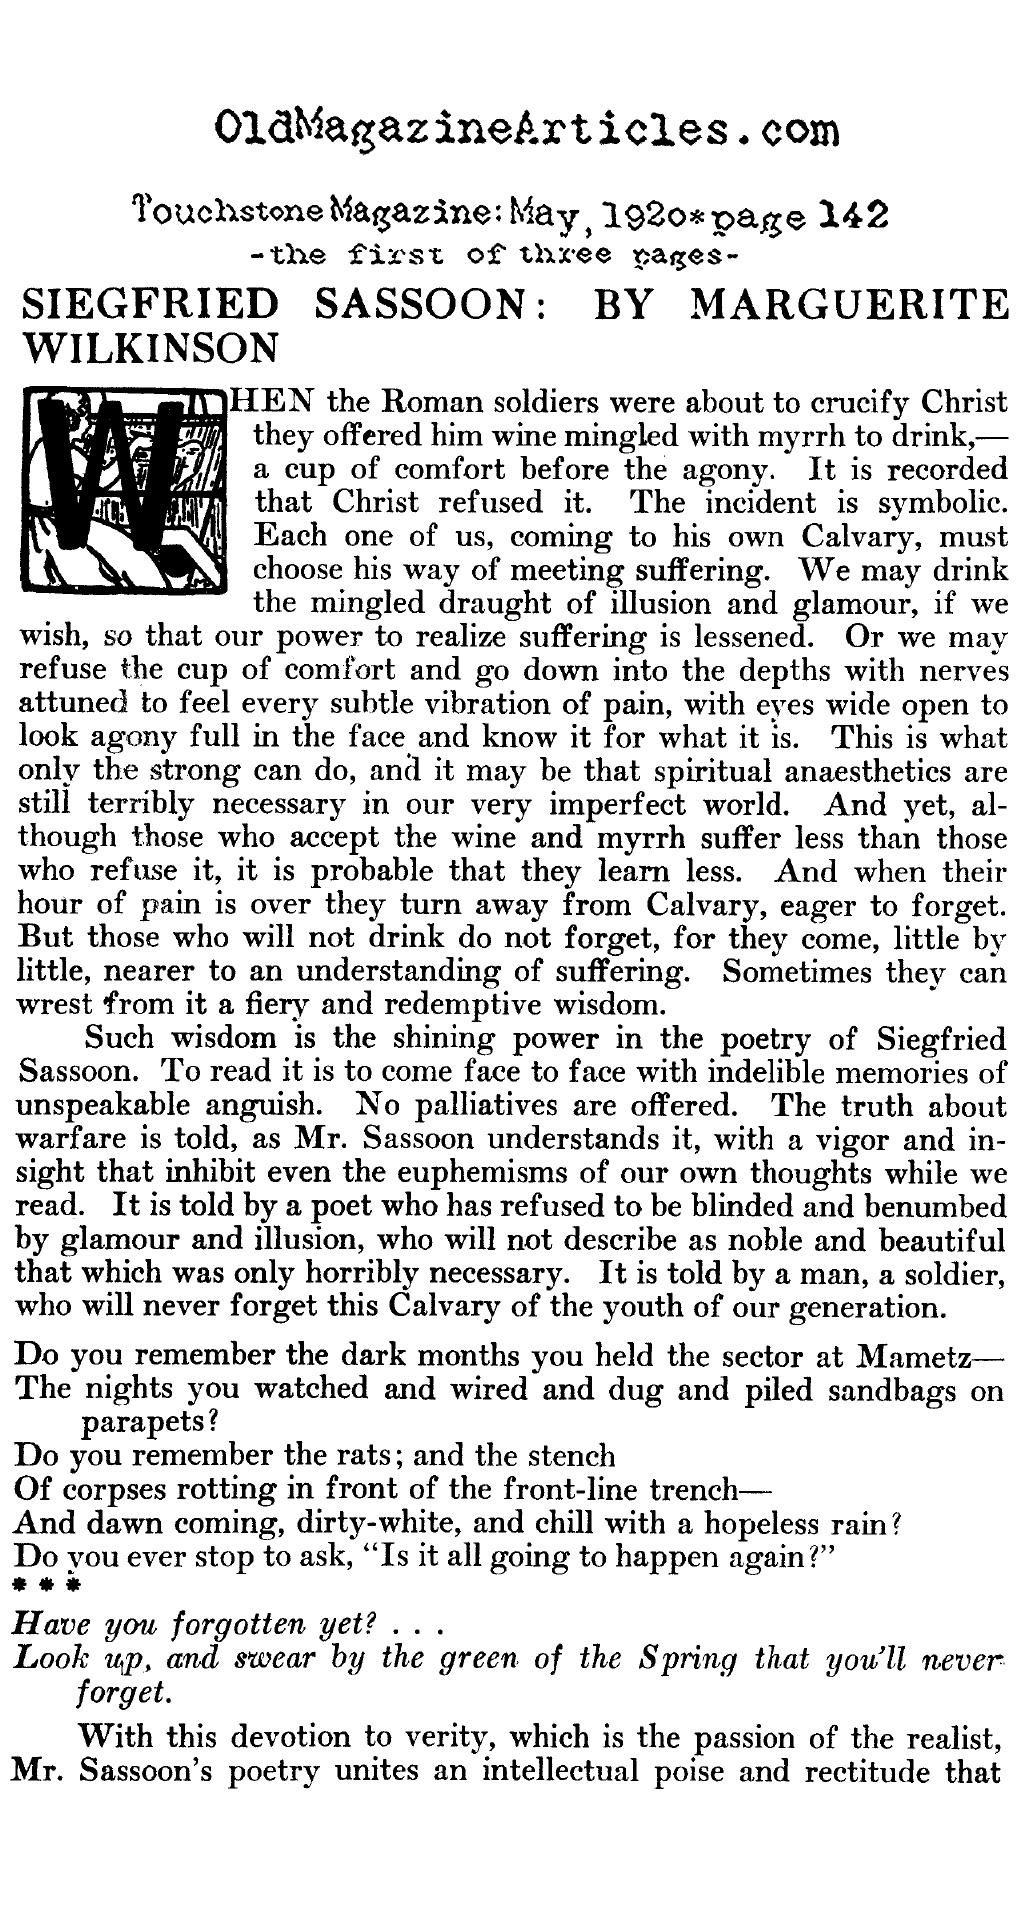 Siegfried Sassoon Reviewed (Touchstone Magazine, 1920)